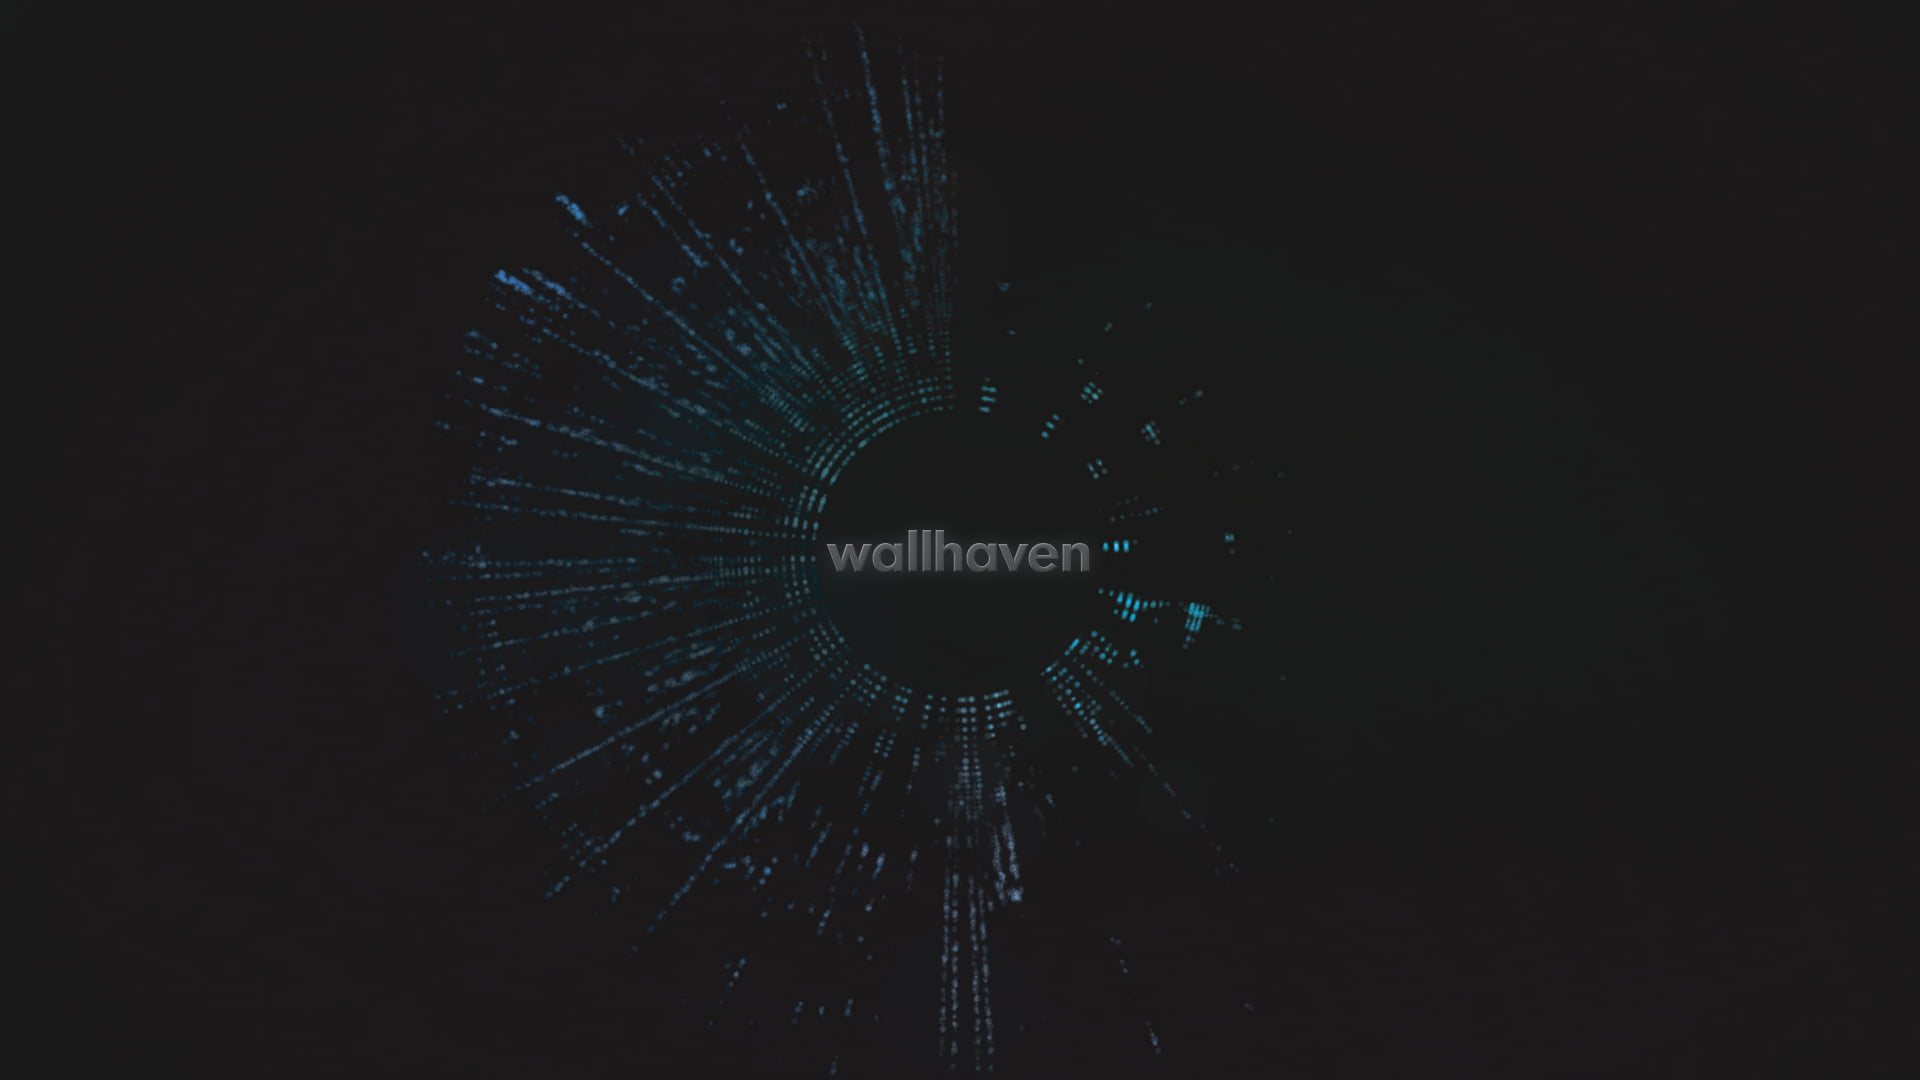 Wallhaven digital wallpaper, simple, blue, gray, technology, internet